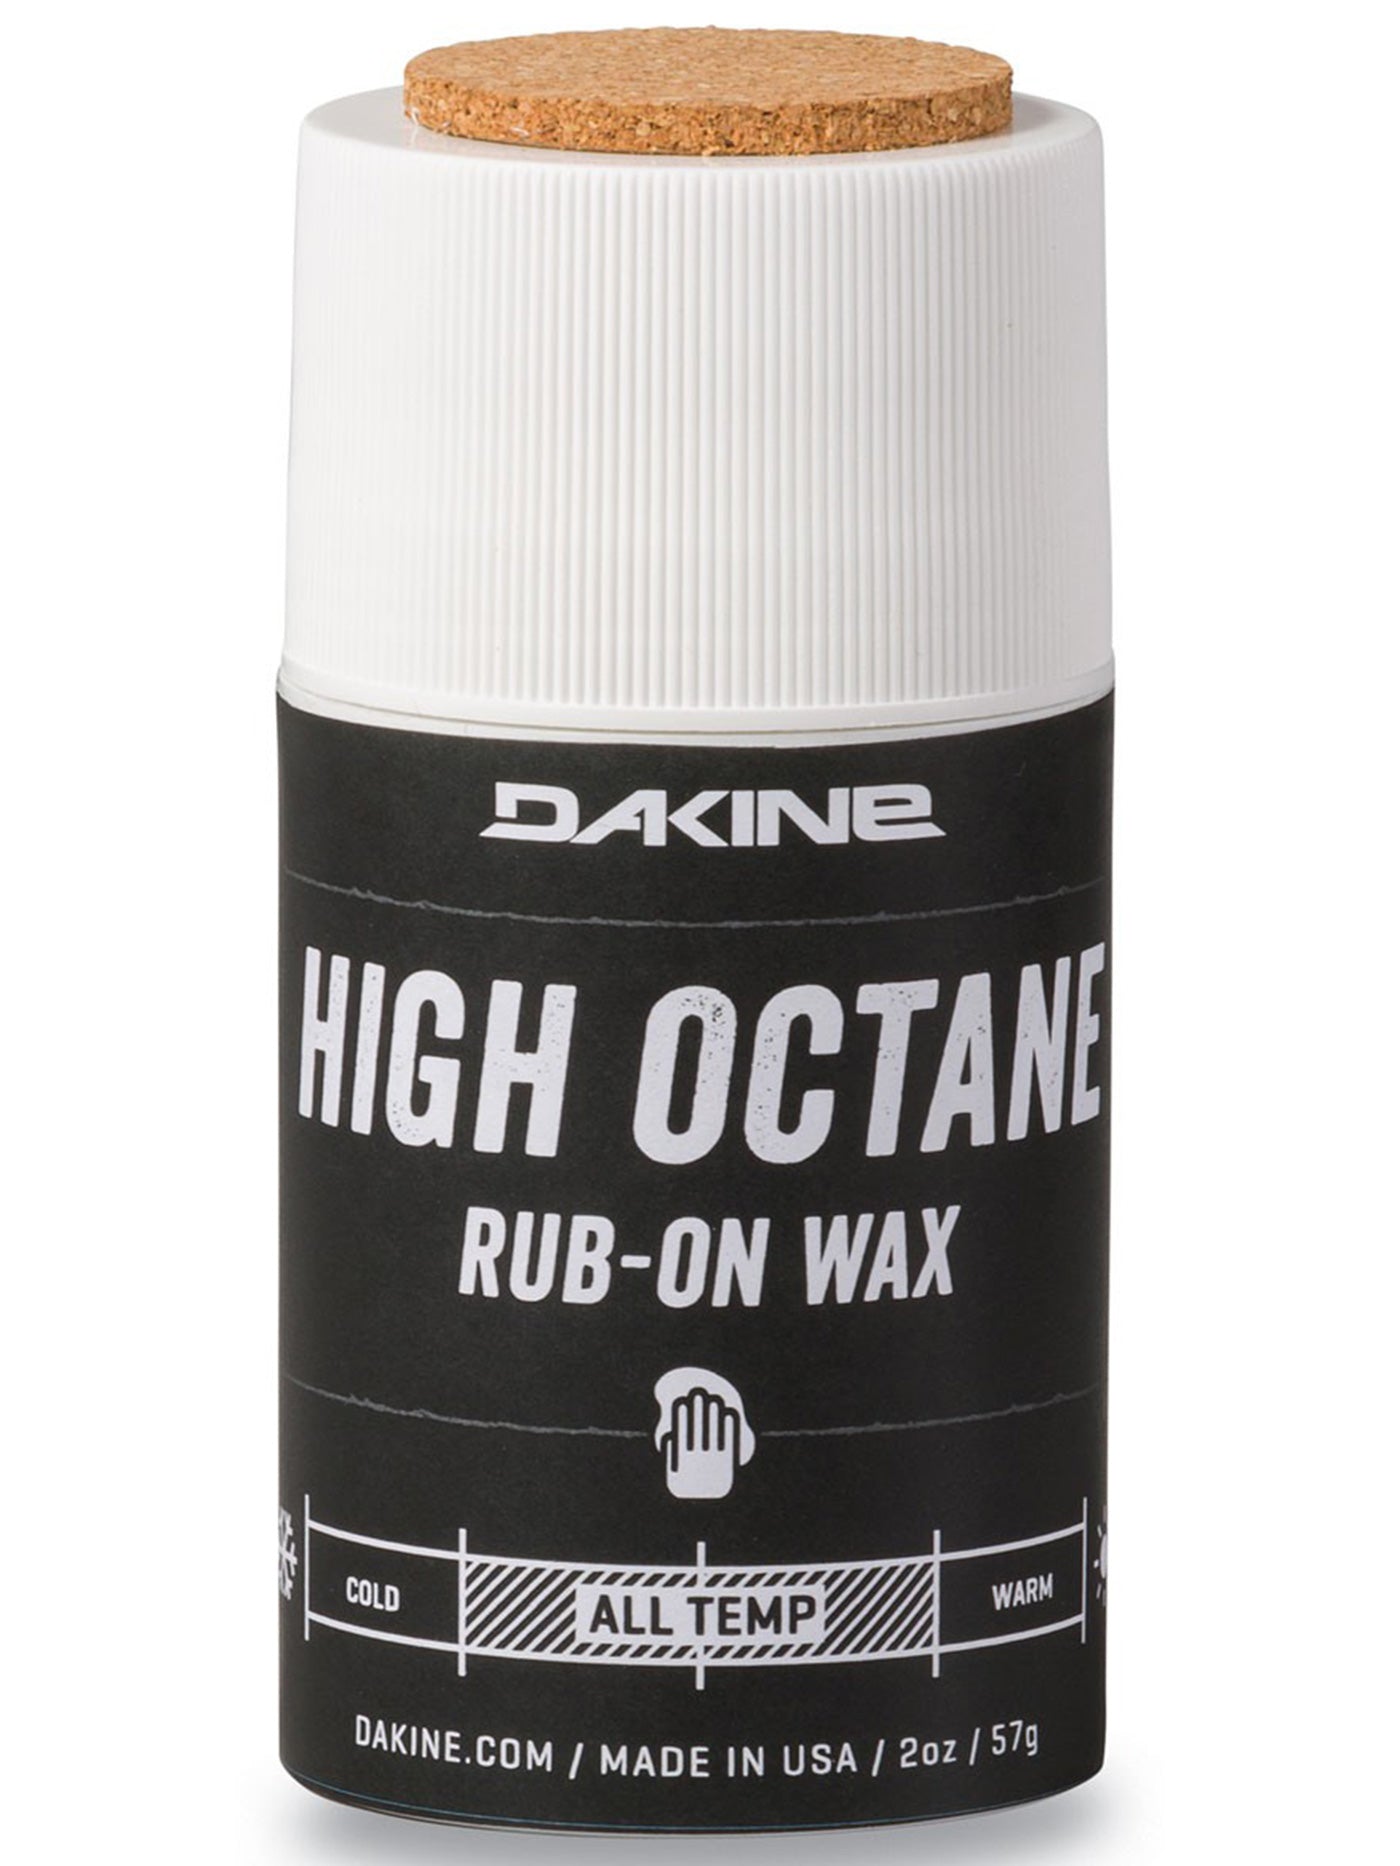 High Octane Rub-On Wax